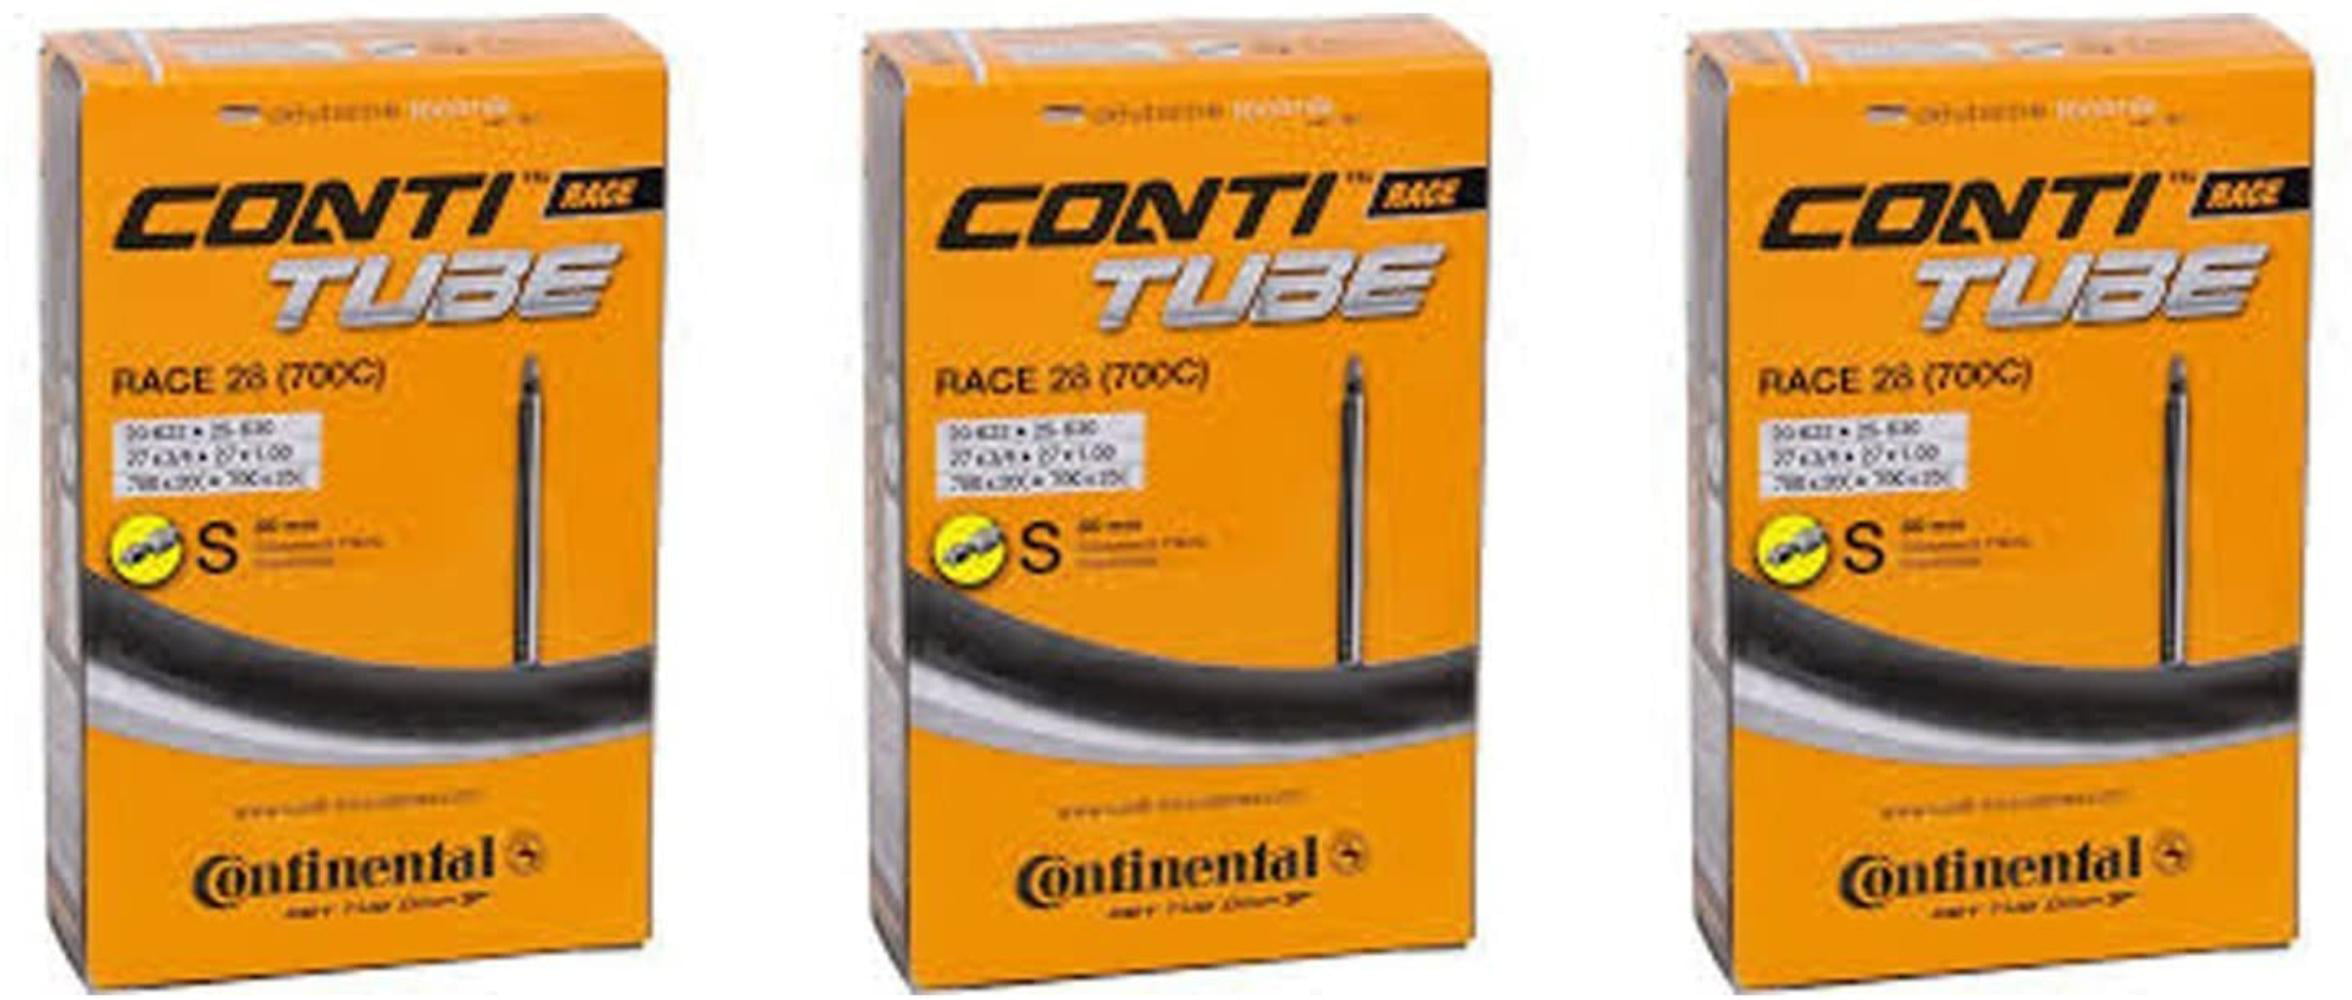 2 x Conti RACE 28 700c 18/25 inner tube 80mm long valve presta free pp 